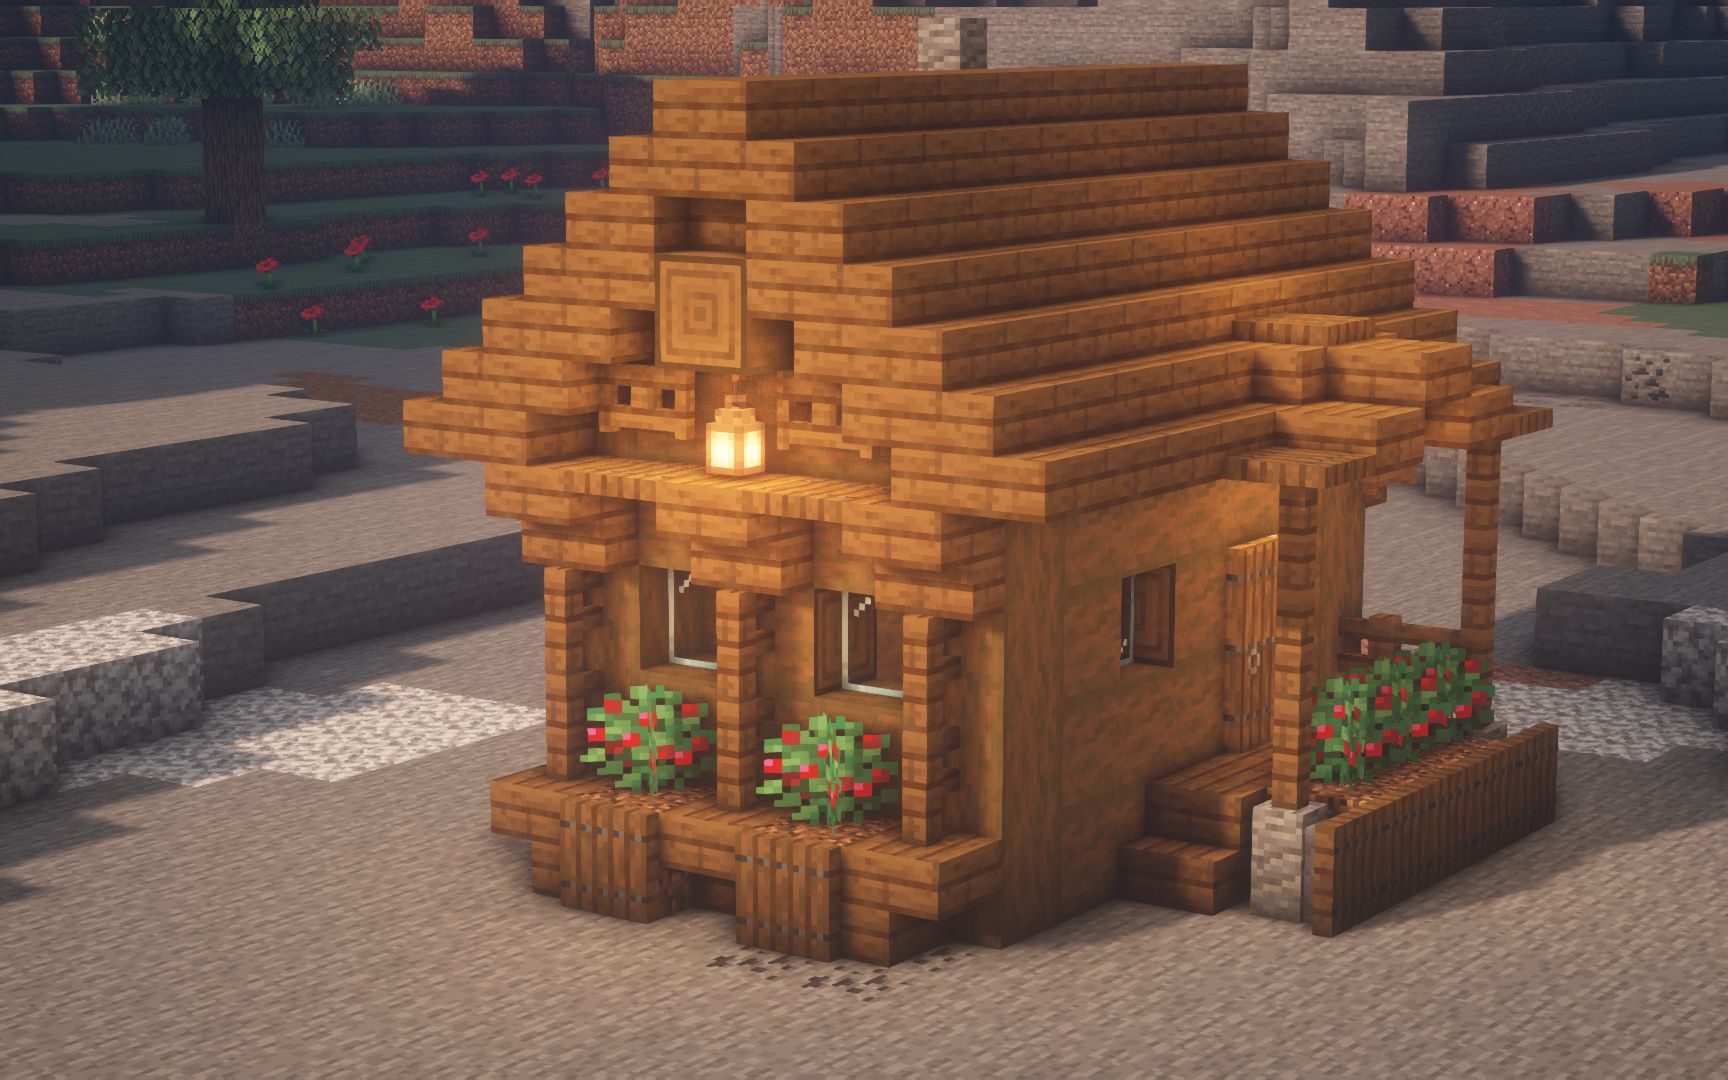 【MC大建造】现代别墅建起来真的不难？#1 Minecraft我的世界现代建筑教学，新手观赏简单生存海景房豪宅_哔哩哔哩 (゜-゜)つロ 干杯~-bilibili